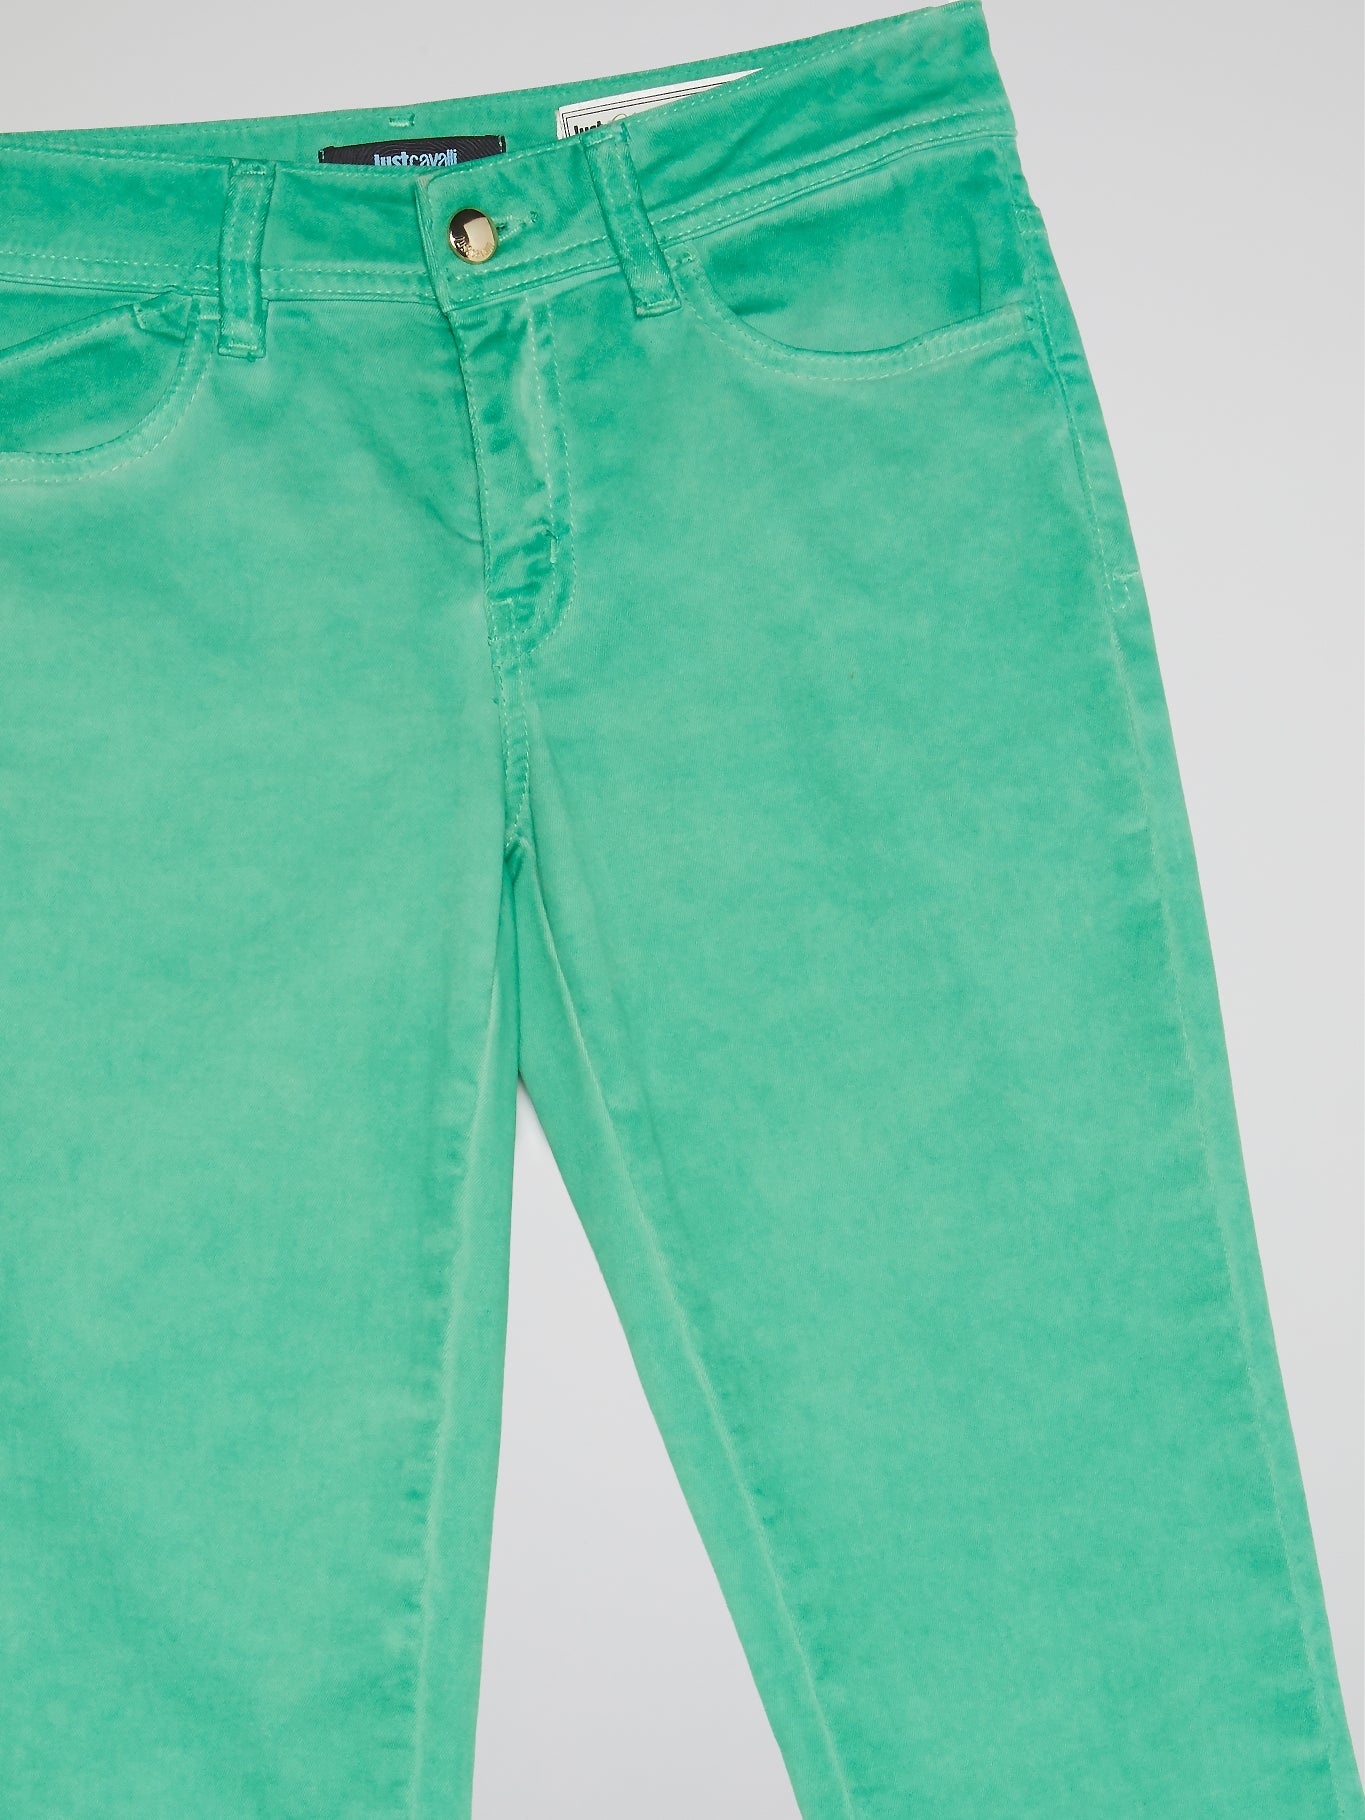 Green Slim Fit Jeans